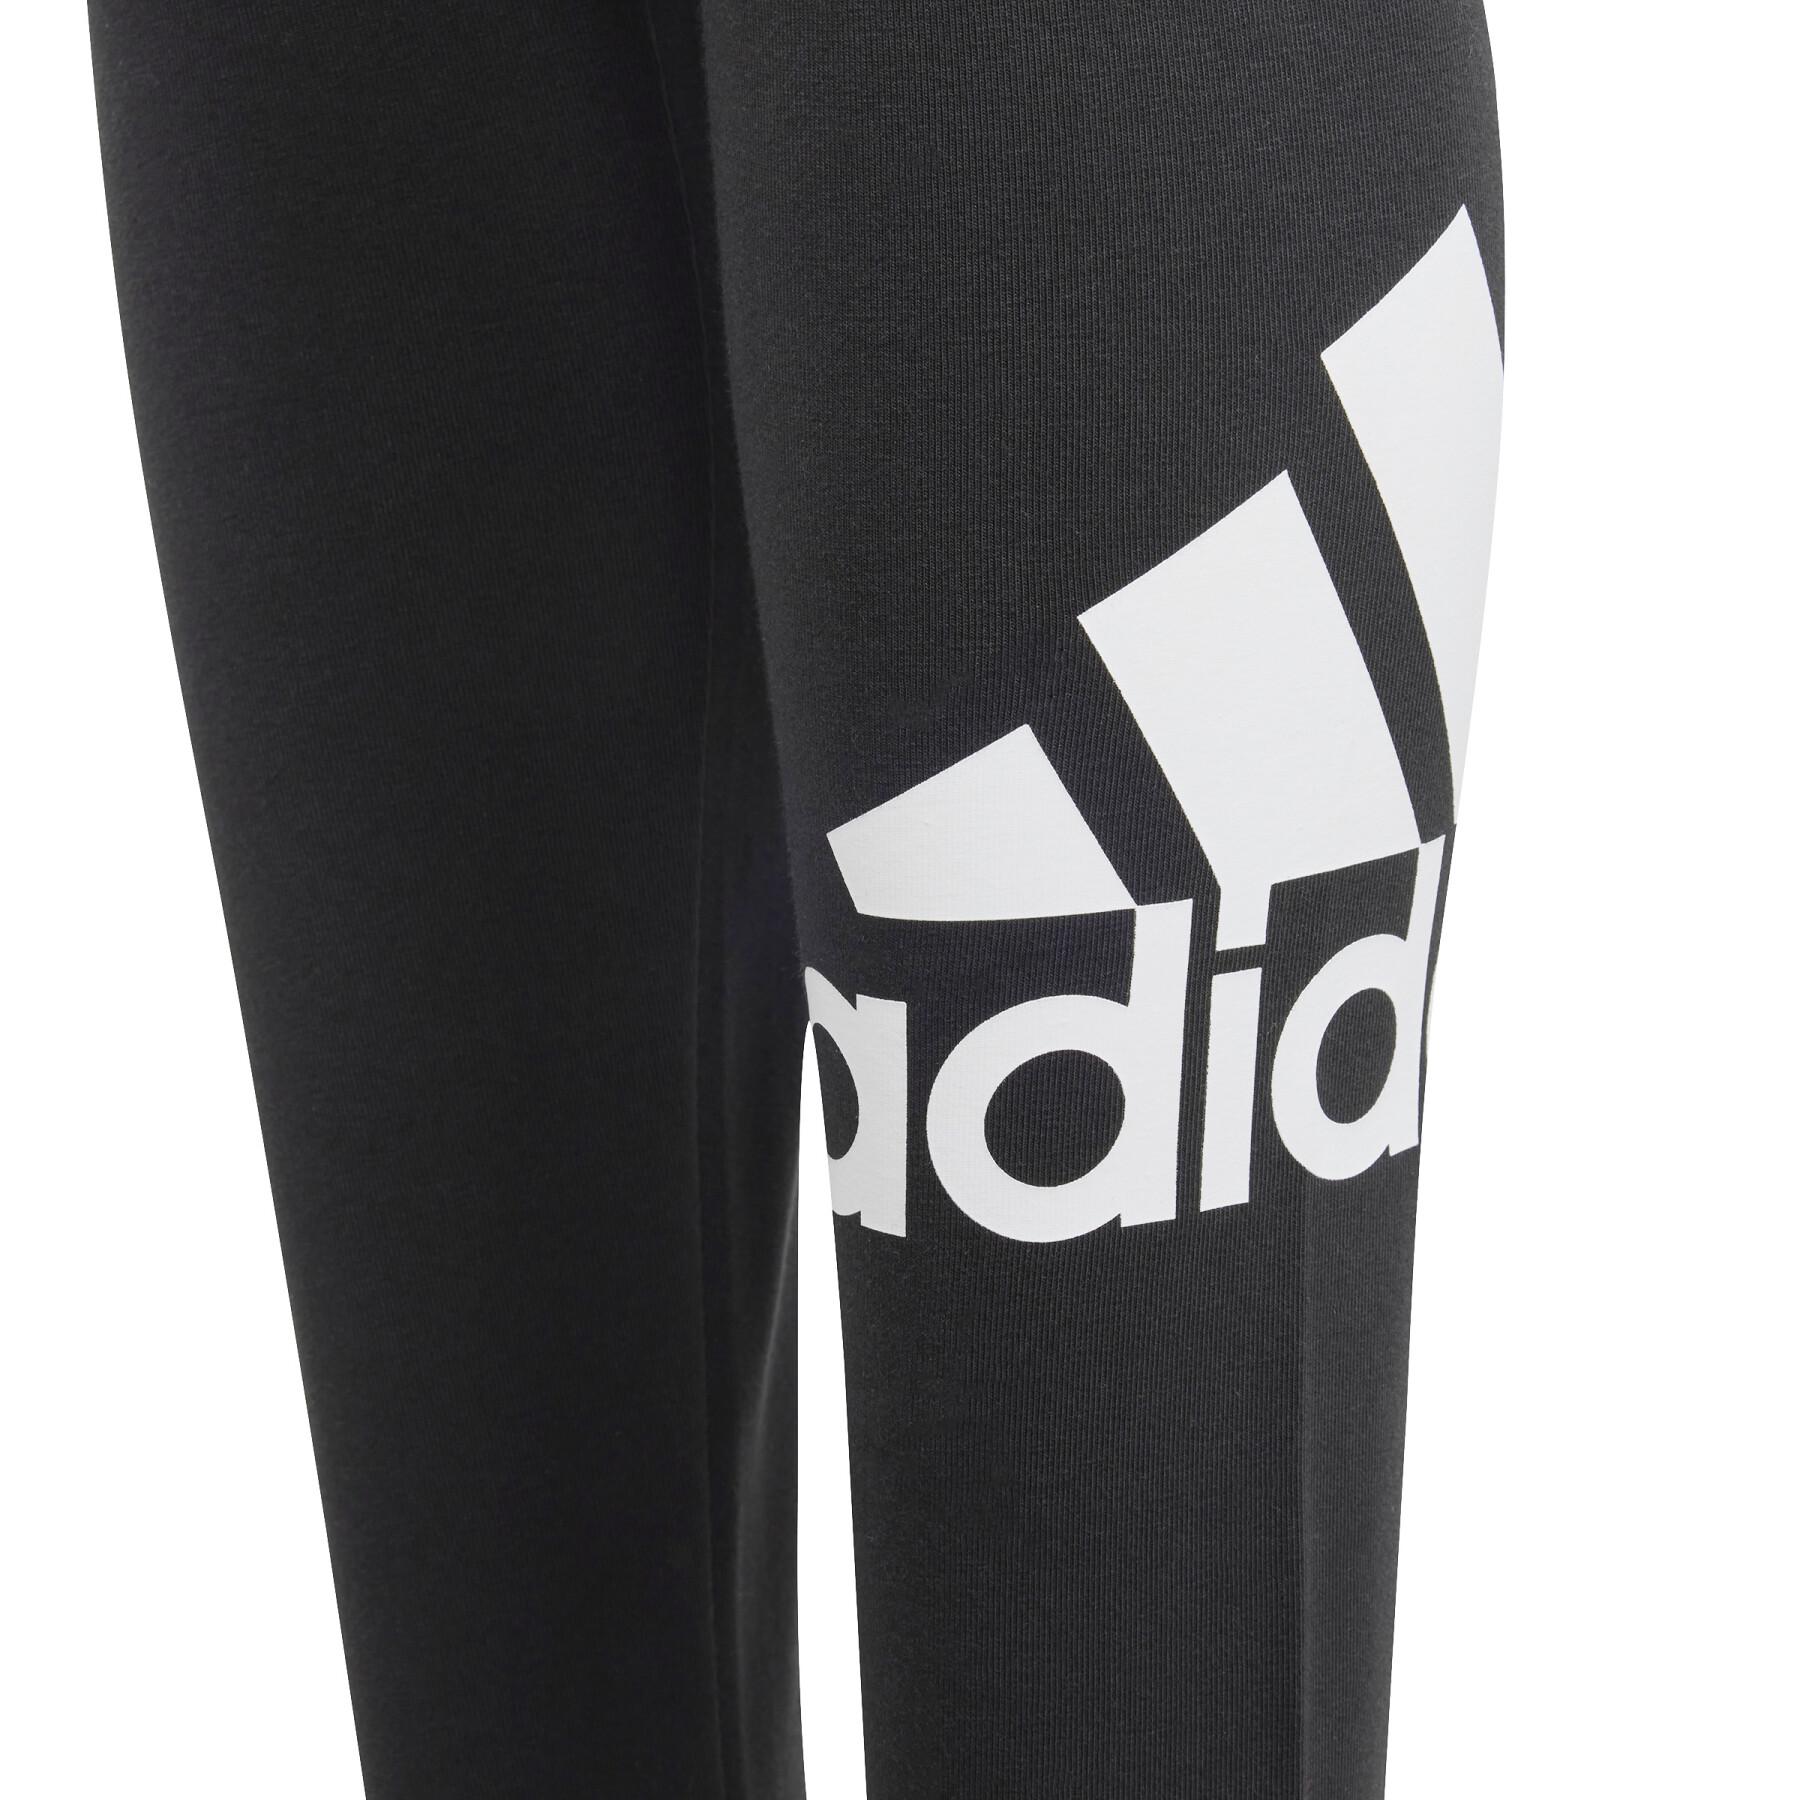 Mode-Online-Shop Legging cotton girl Logo Handball - - wear - Essentials adidas Big Baselayers Textile